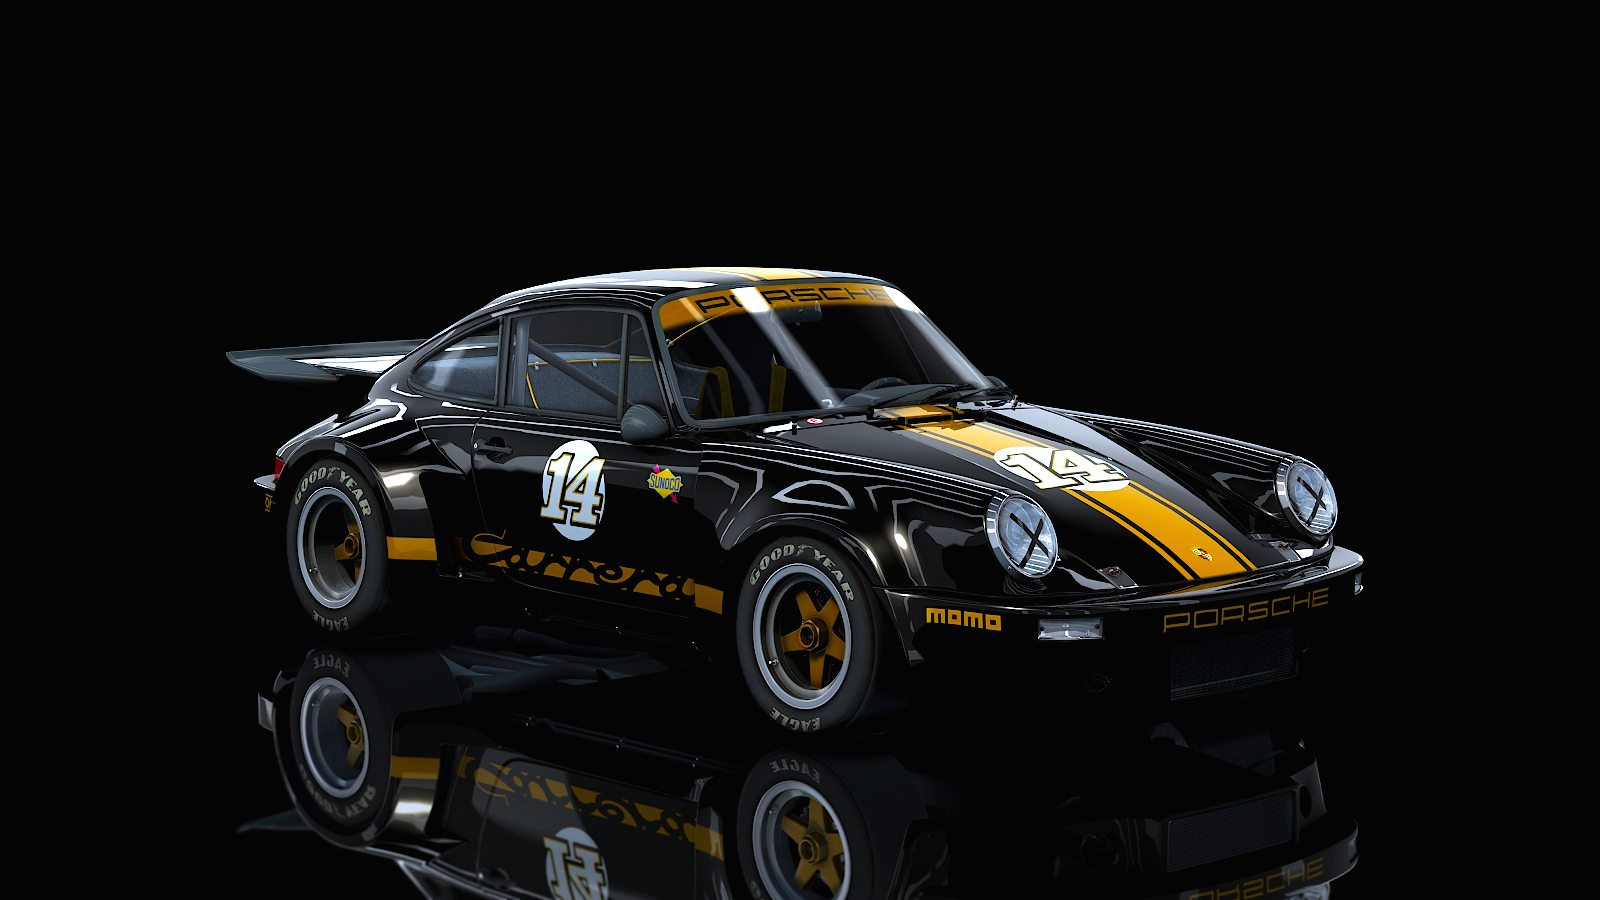 Porsche 911 Carrera RSR 3.0, skin 14_RSR_Black_Gold